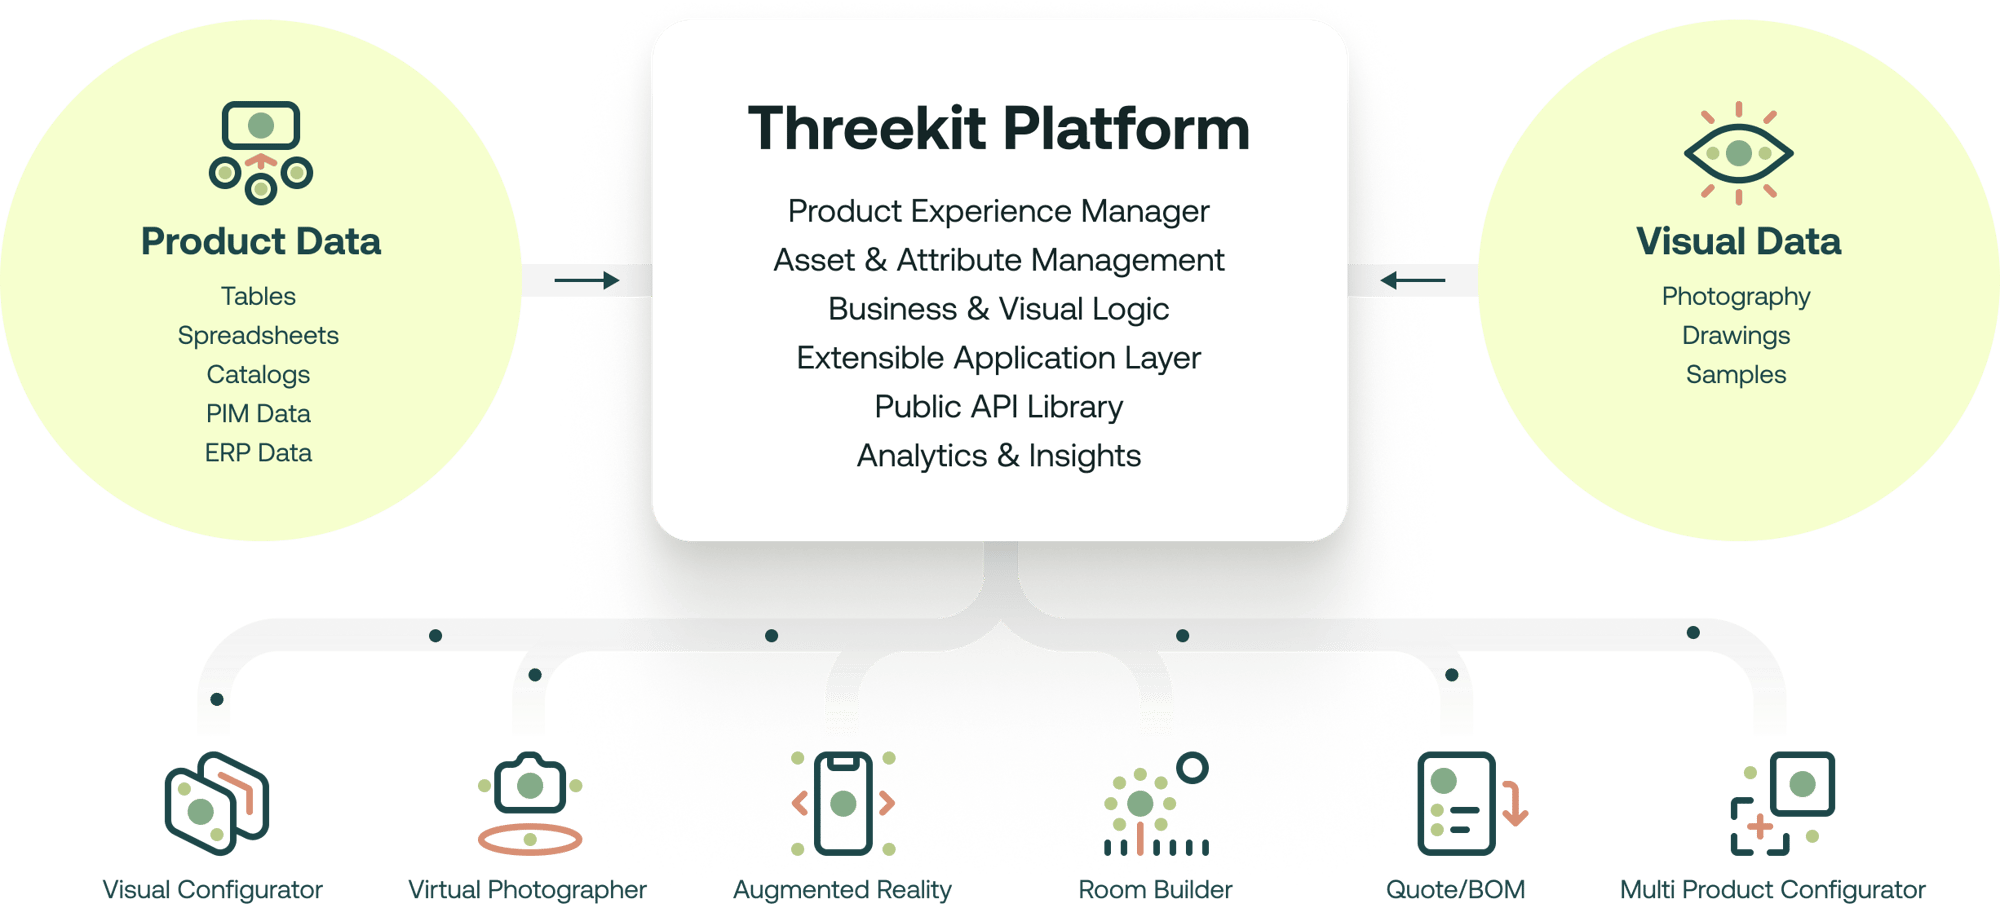 threekit platform overview-1